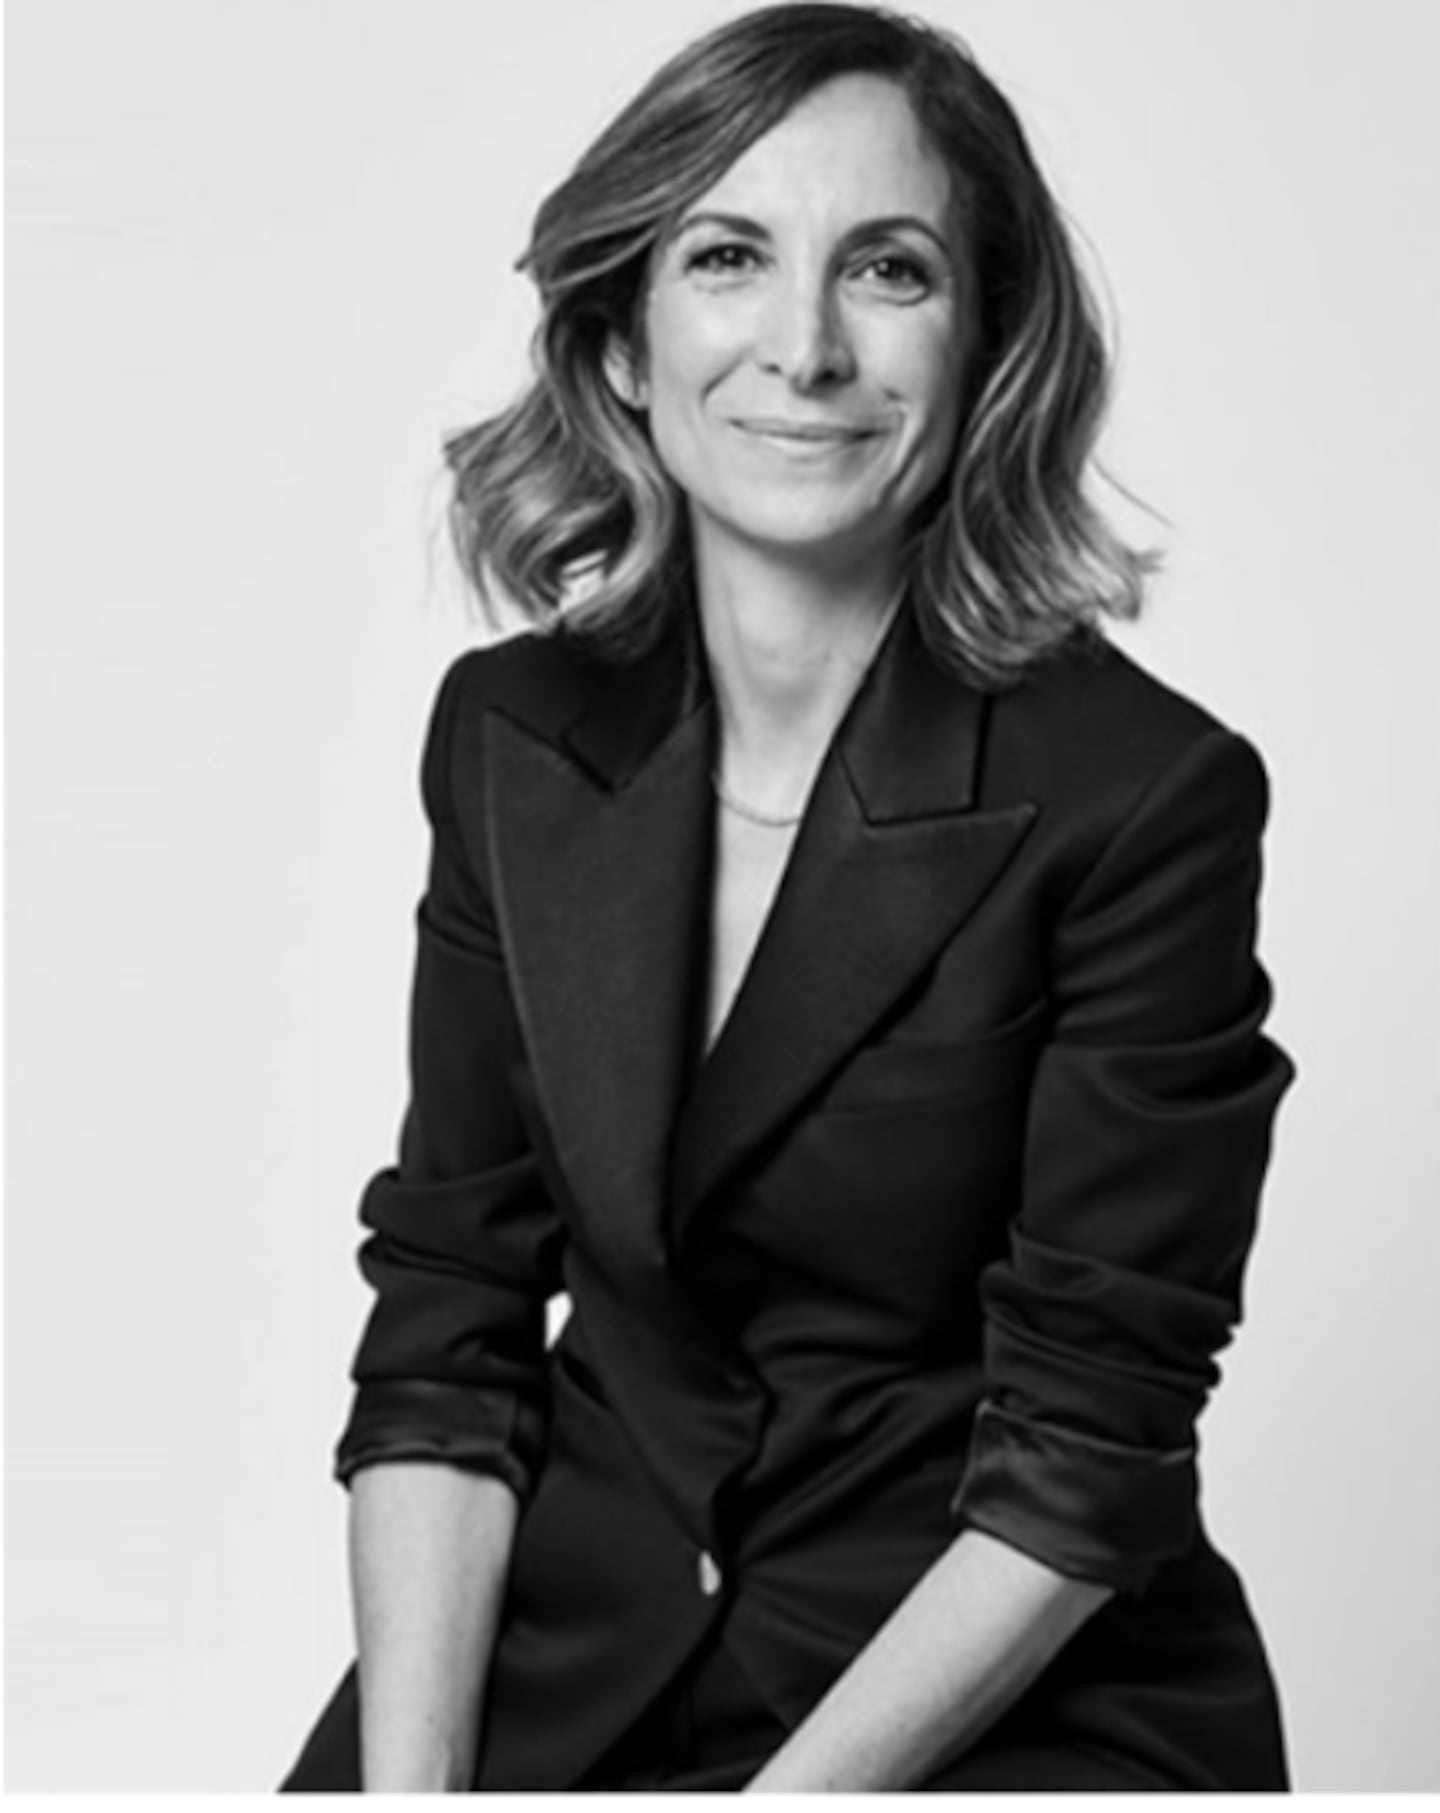 Natalia Gamero del Castillo, managing director of Condé Nast in Europe. Condé Nast